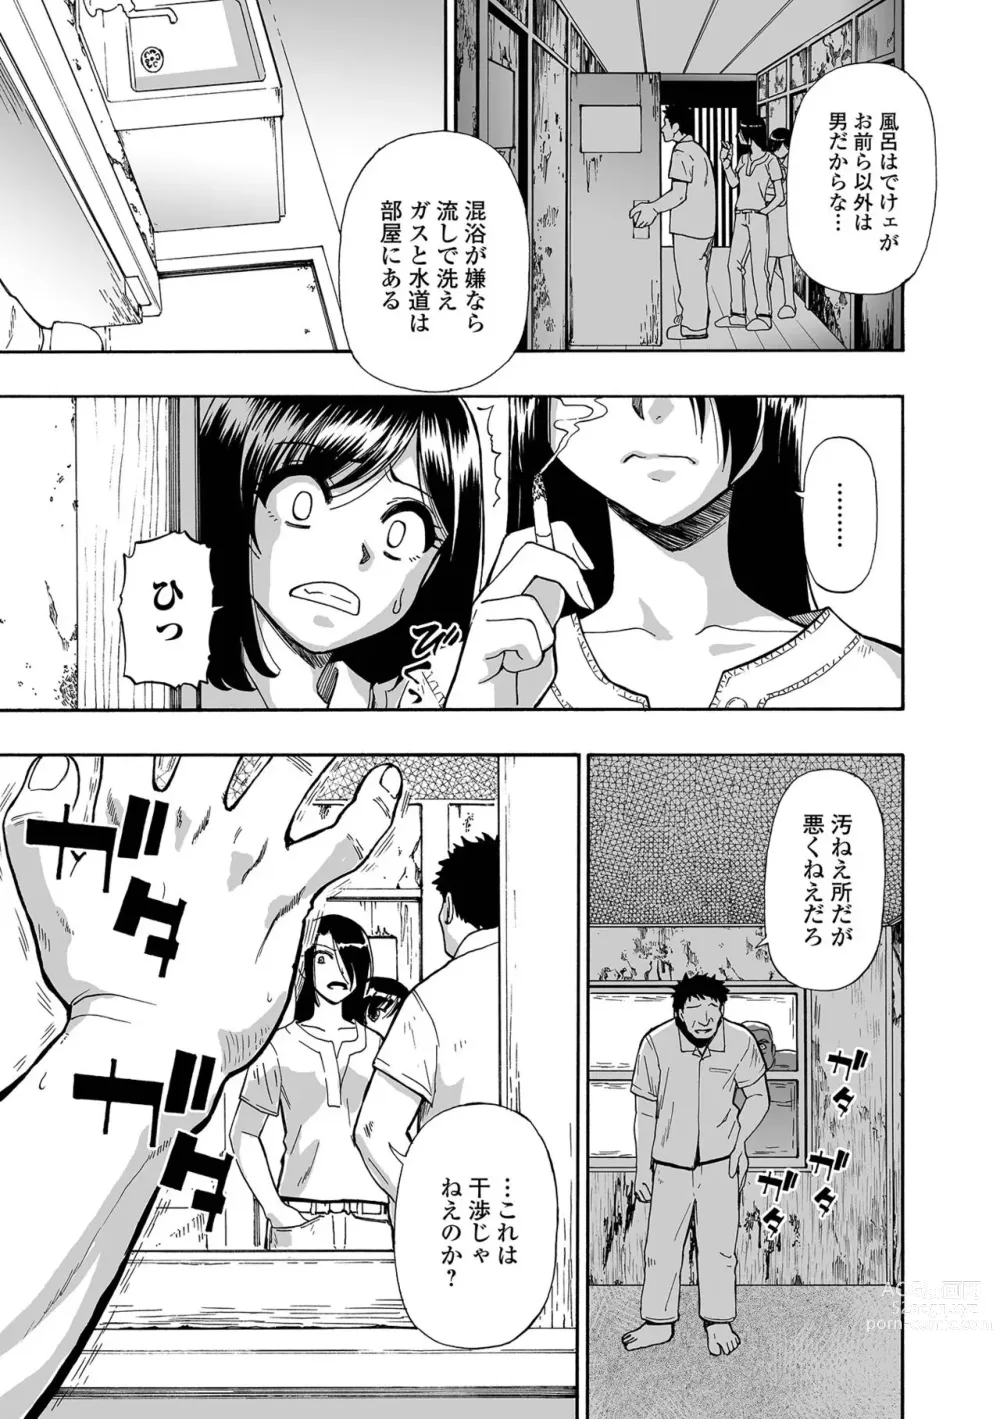 Page 6 of manga Garbage Dump Ch. 1-9